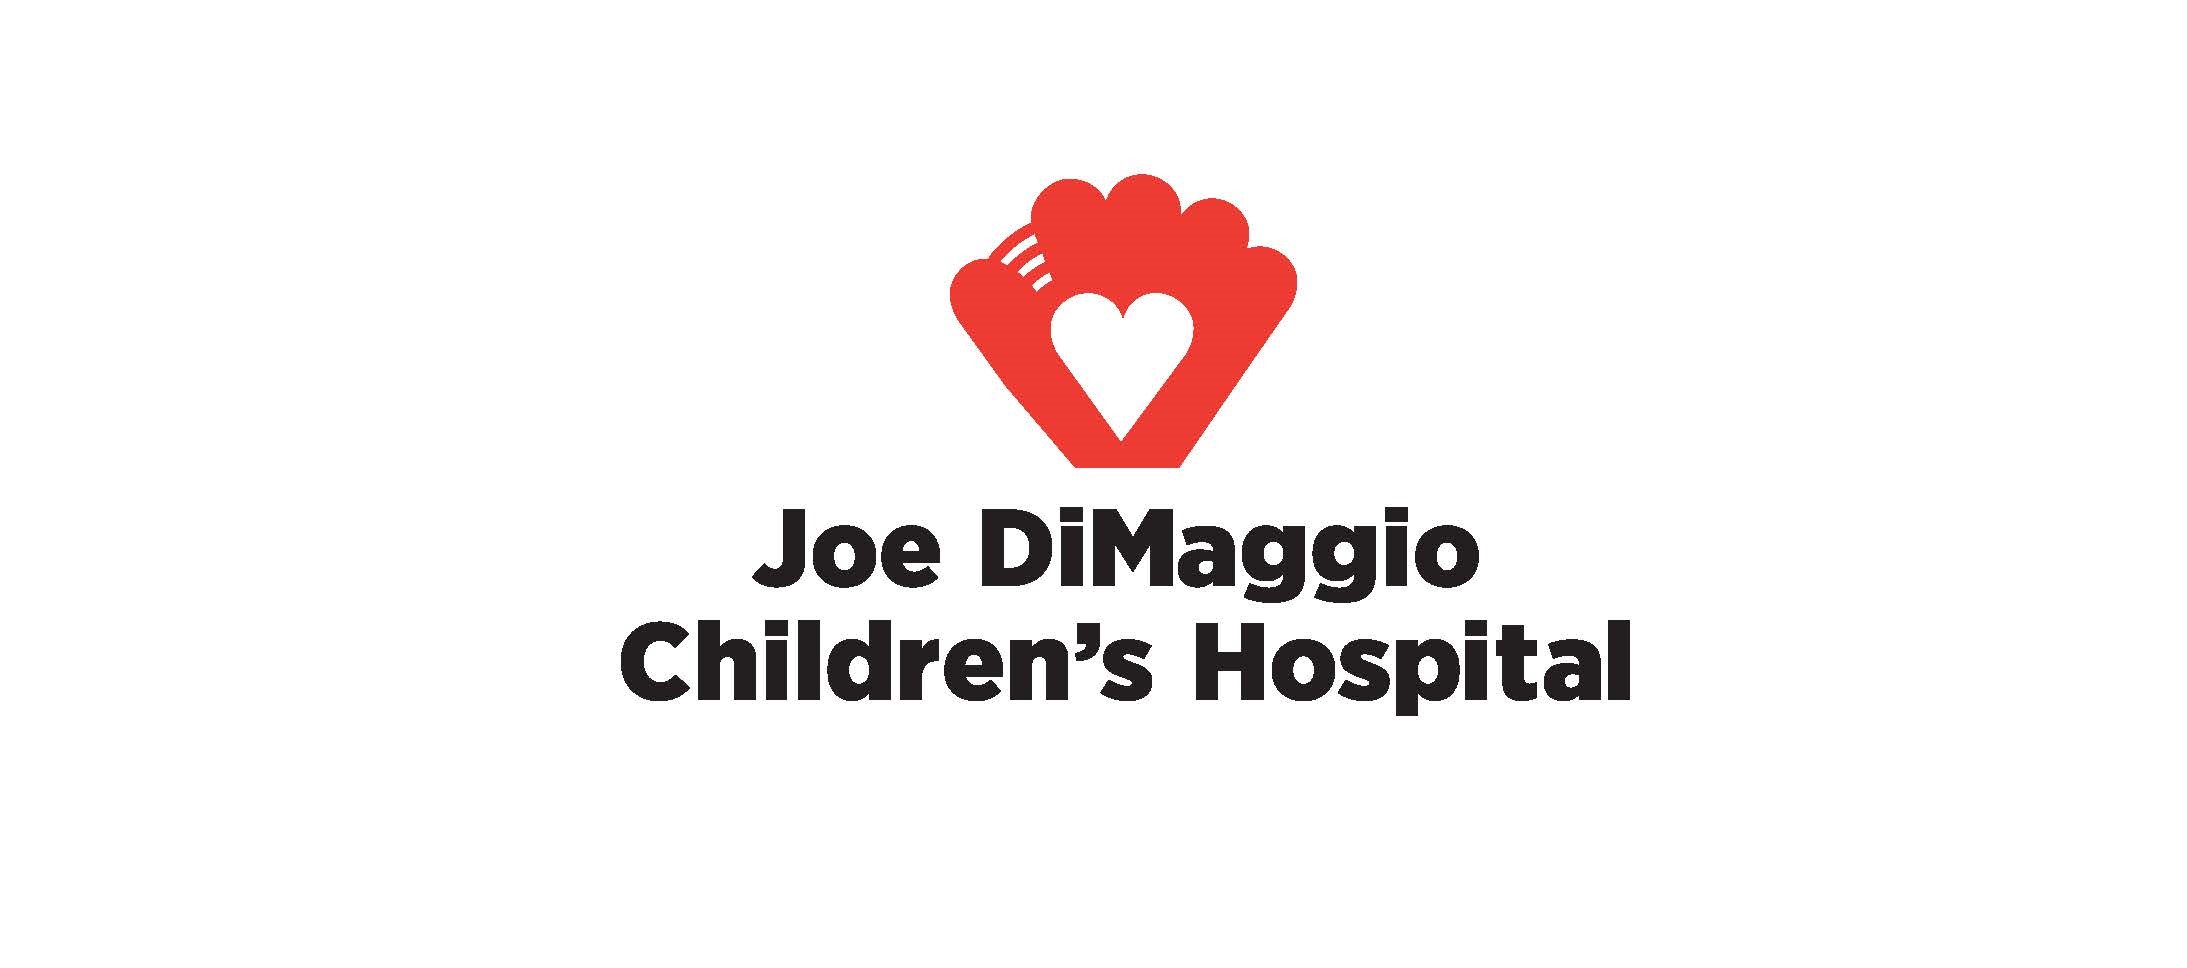 Joe DiMaggio Children's Hospital 